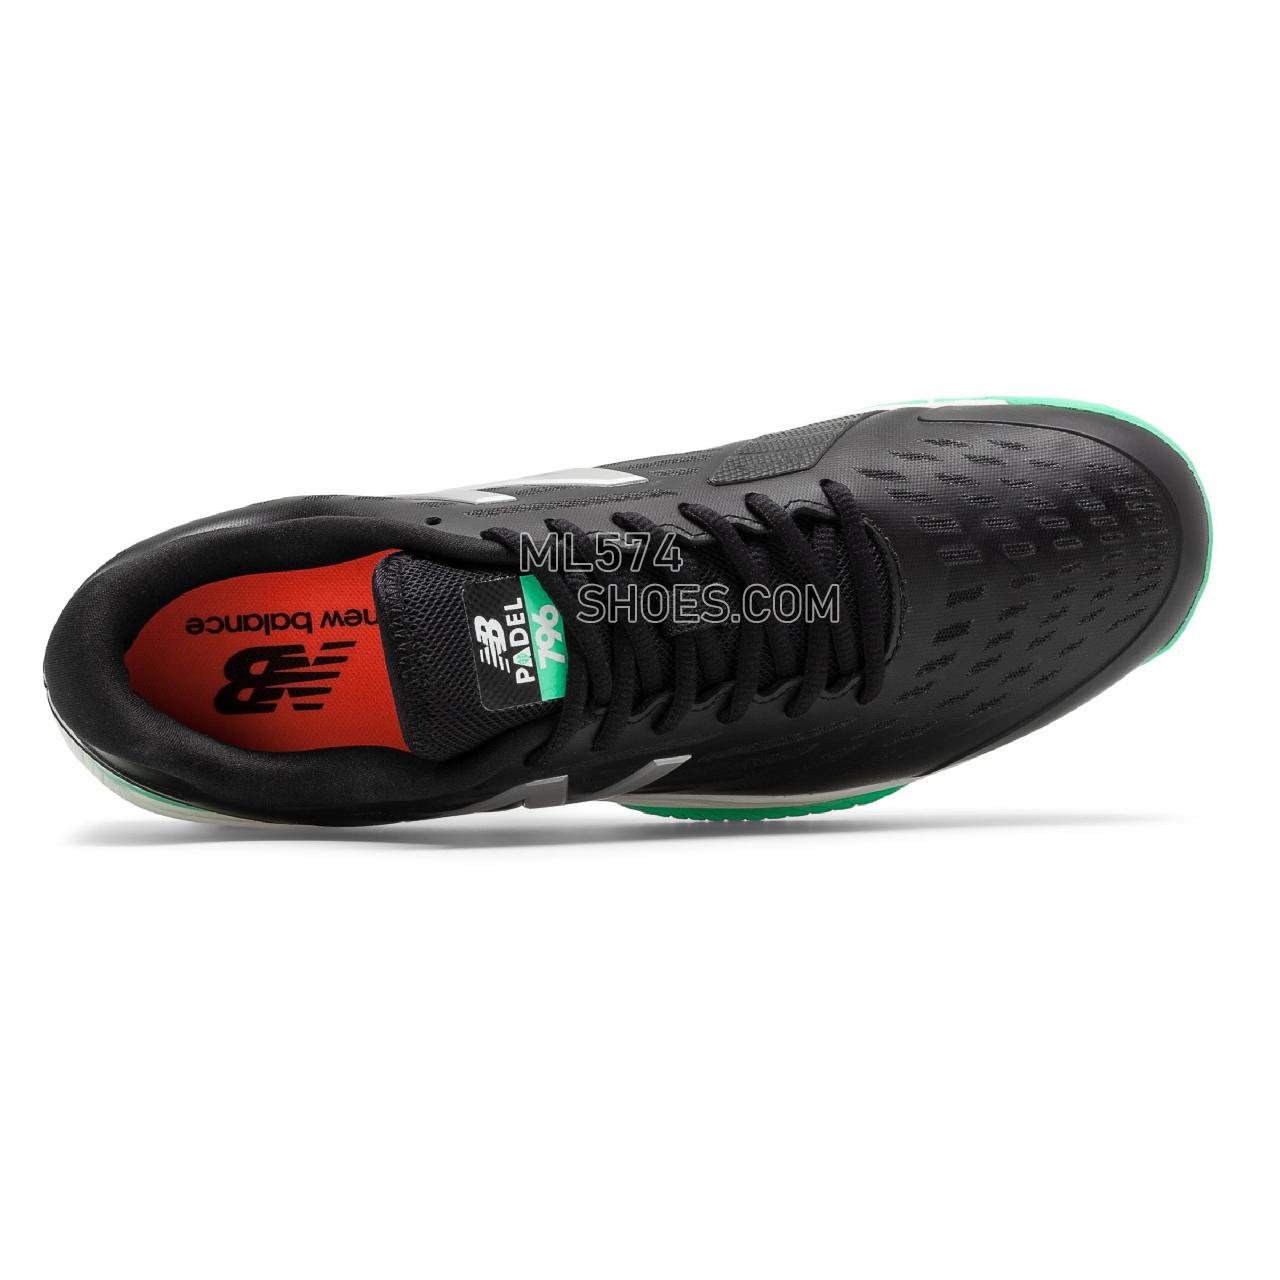 New Balance 796 - Men's Tennis - Black with Neon Emerald - MCH796PA